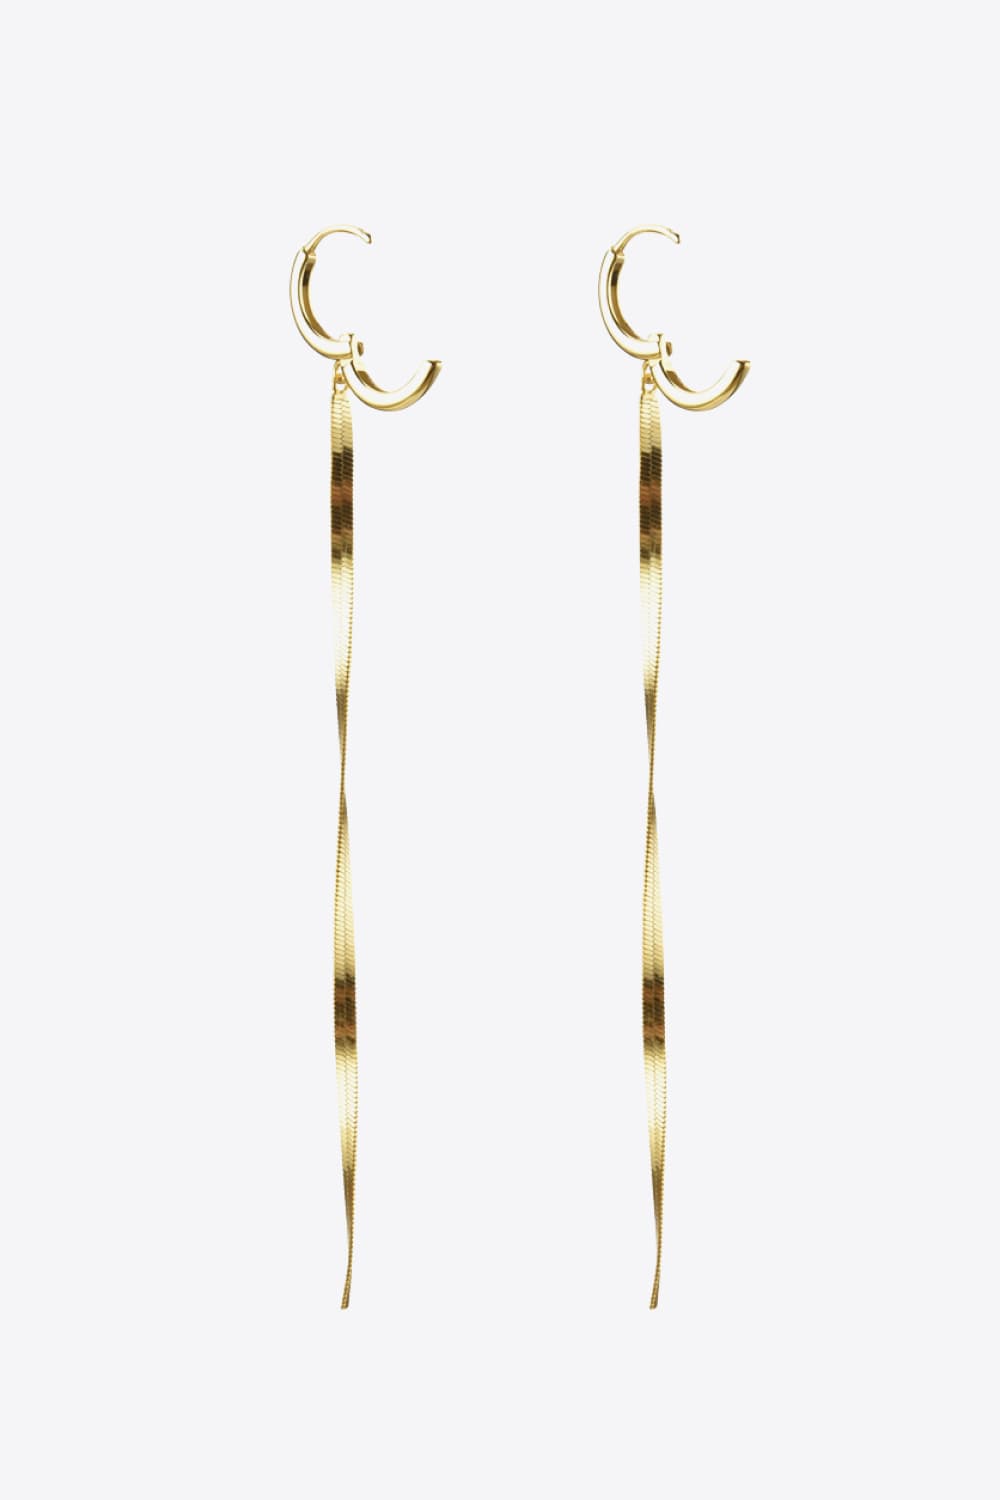 925 Sterling Silver Long Snake Chain Earrings - Earrings - FITGGINS